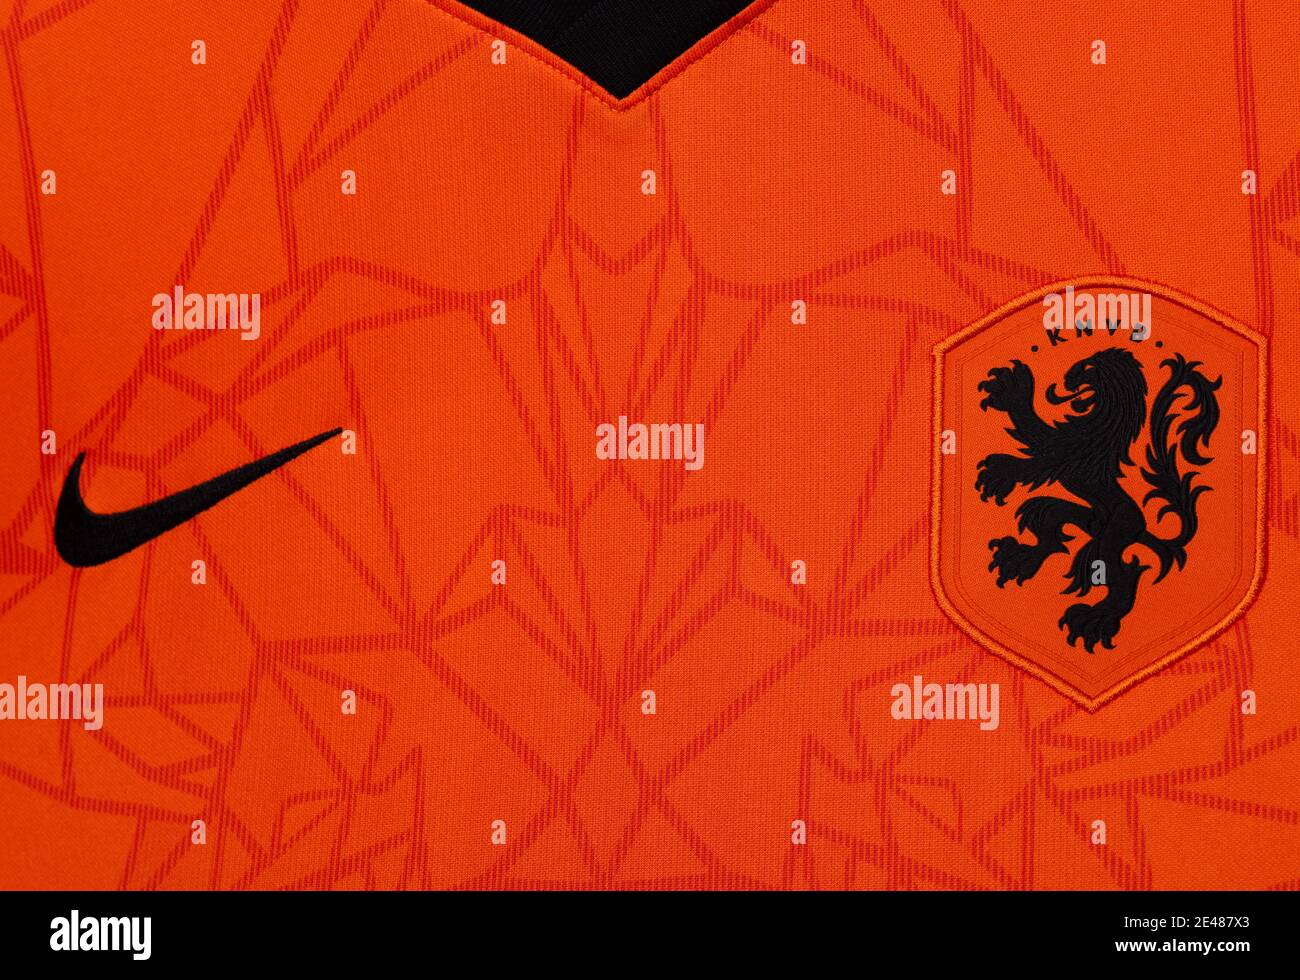 NETHERLANDS KNVB LOGO FIFA WORLD CUP X - LARGE STICKER .. 8.25 X 11.75 INCH